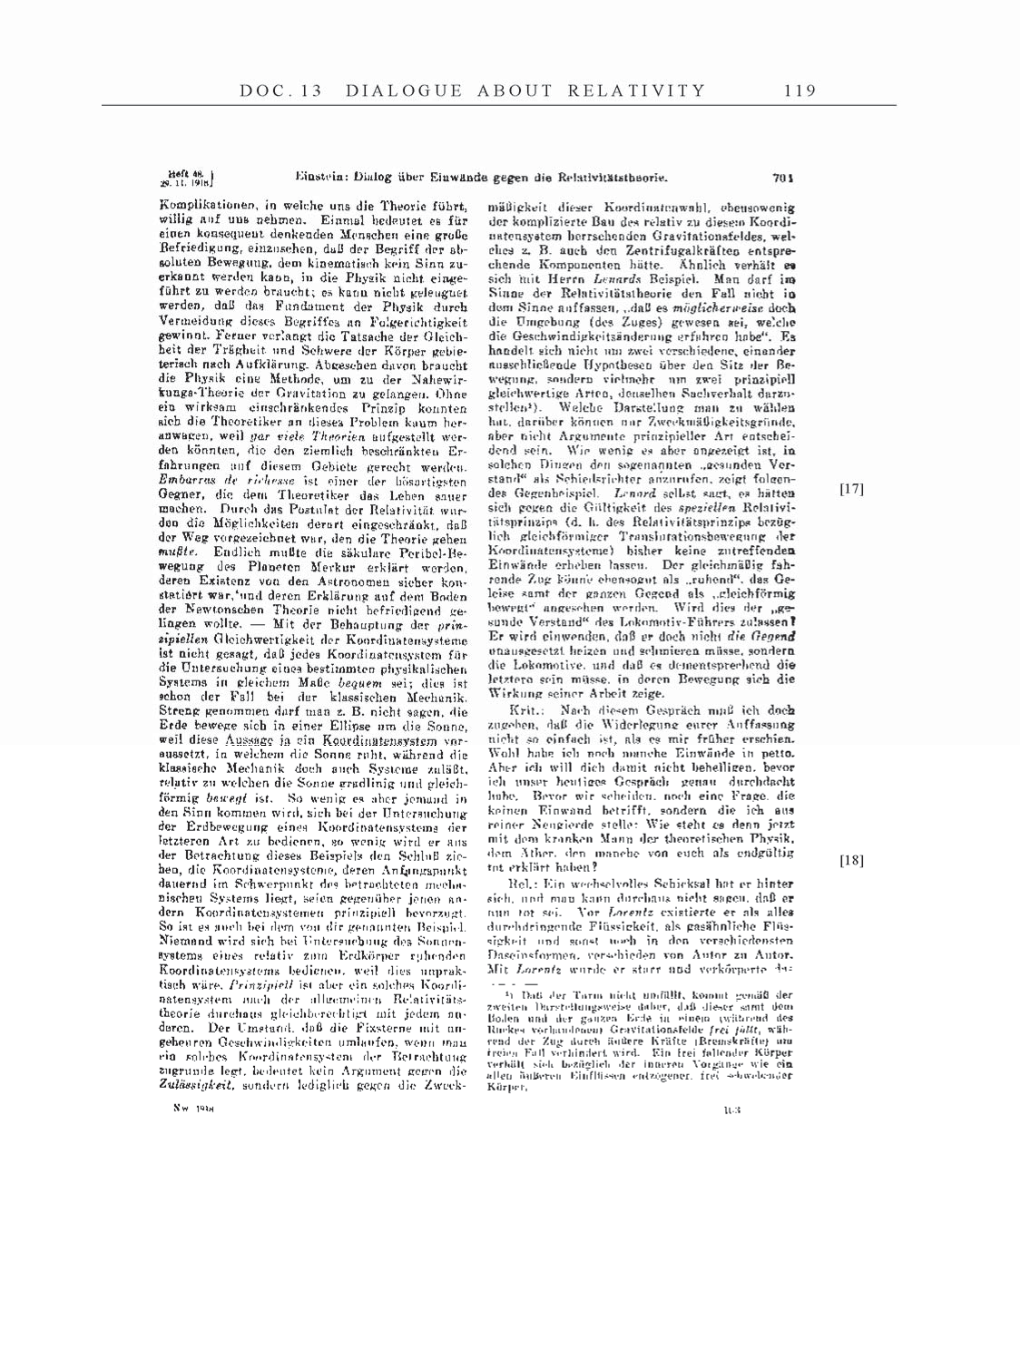 Volume 7: The Berlin Years: Writings, 1918-1921 page 119